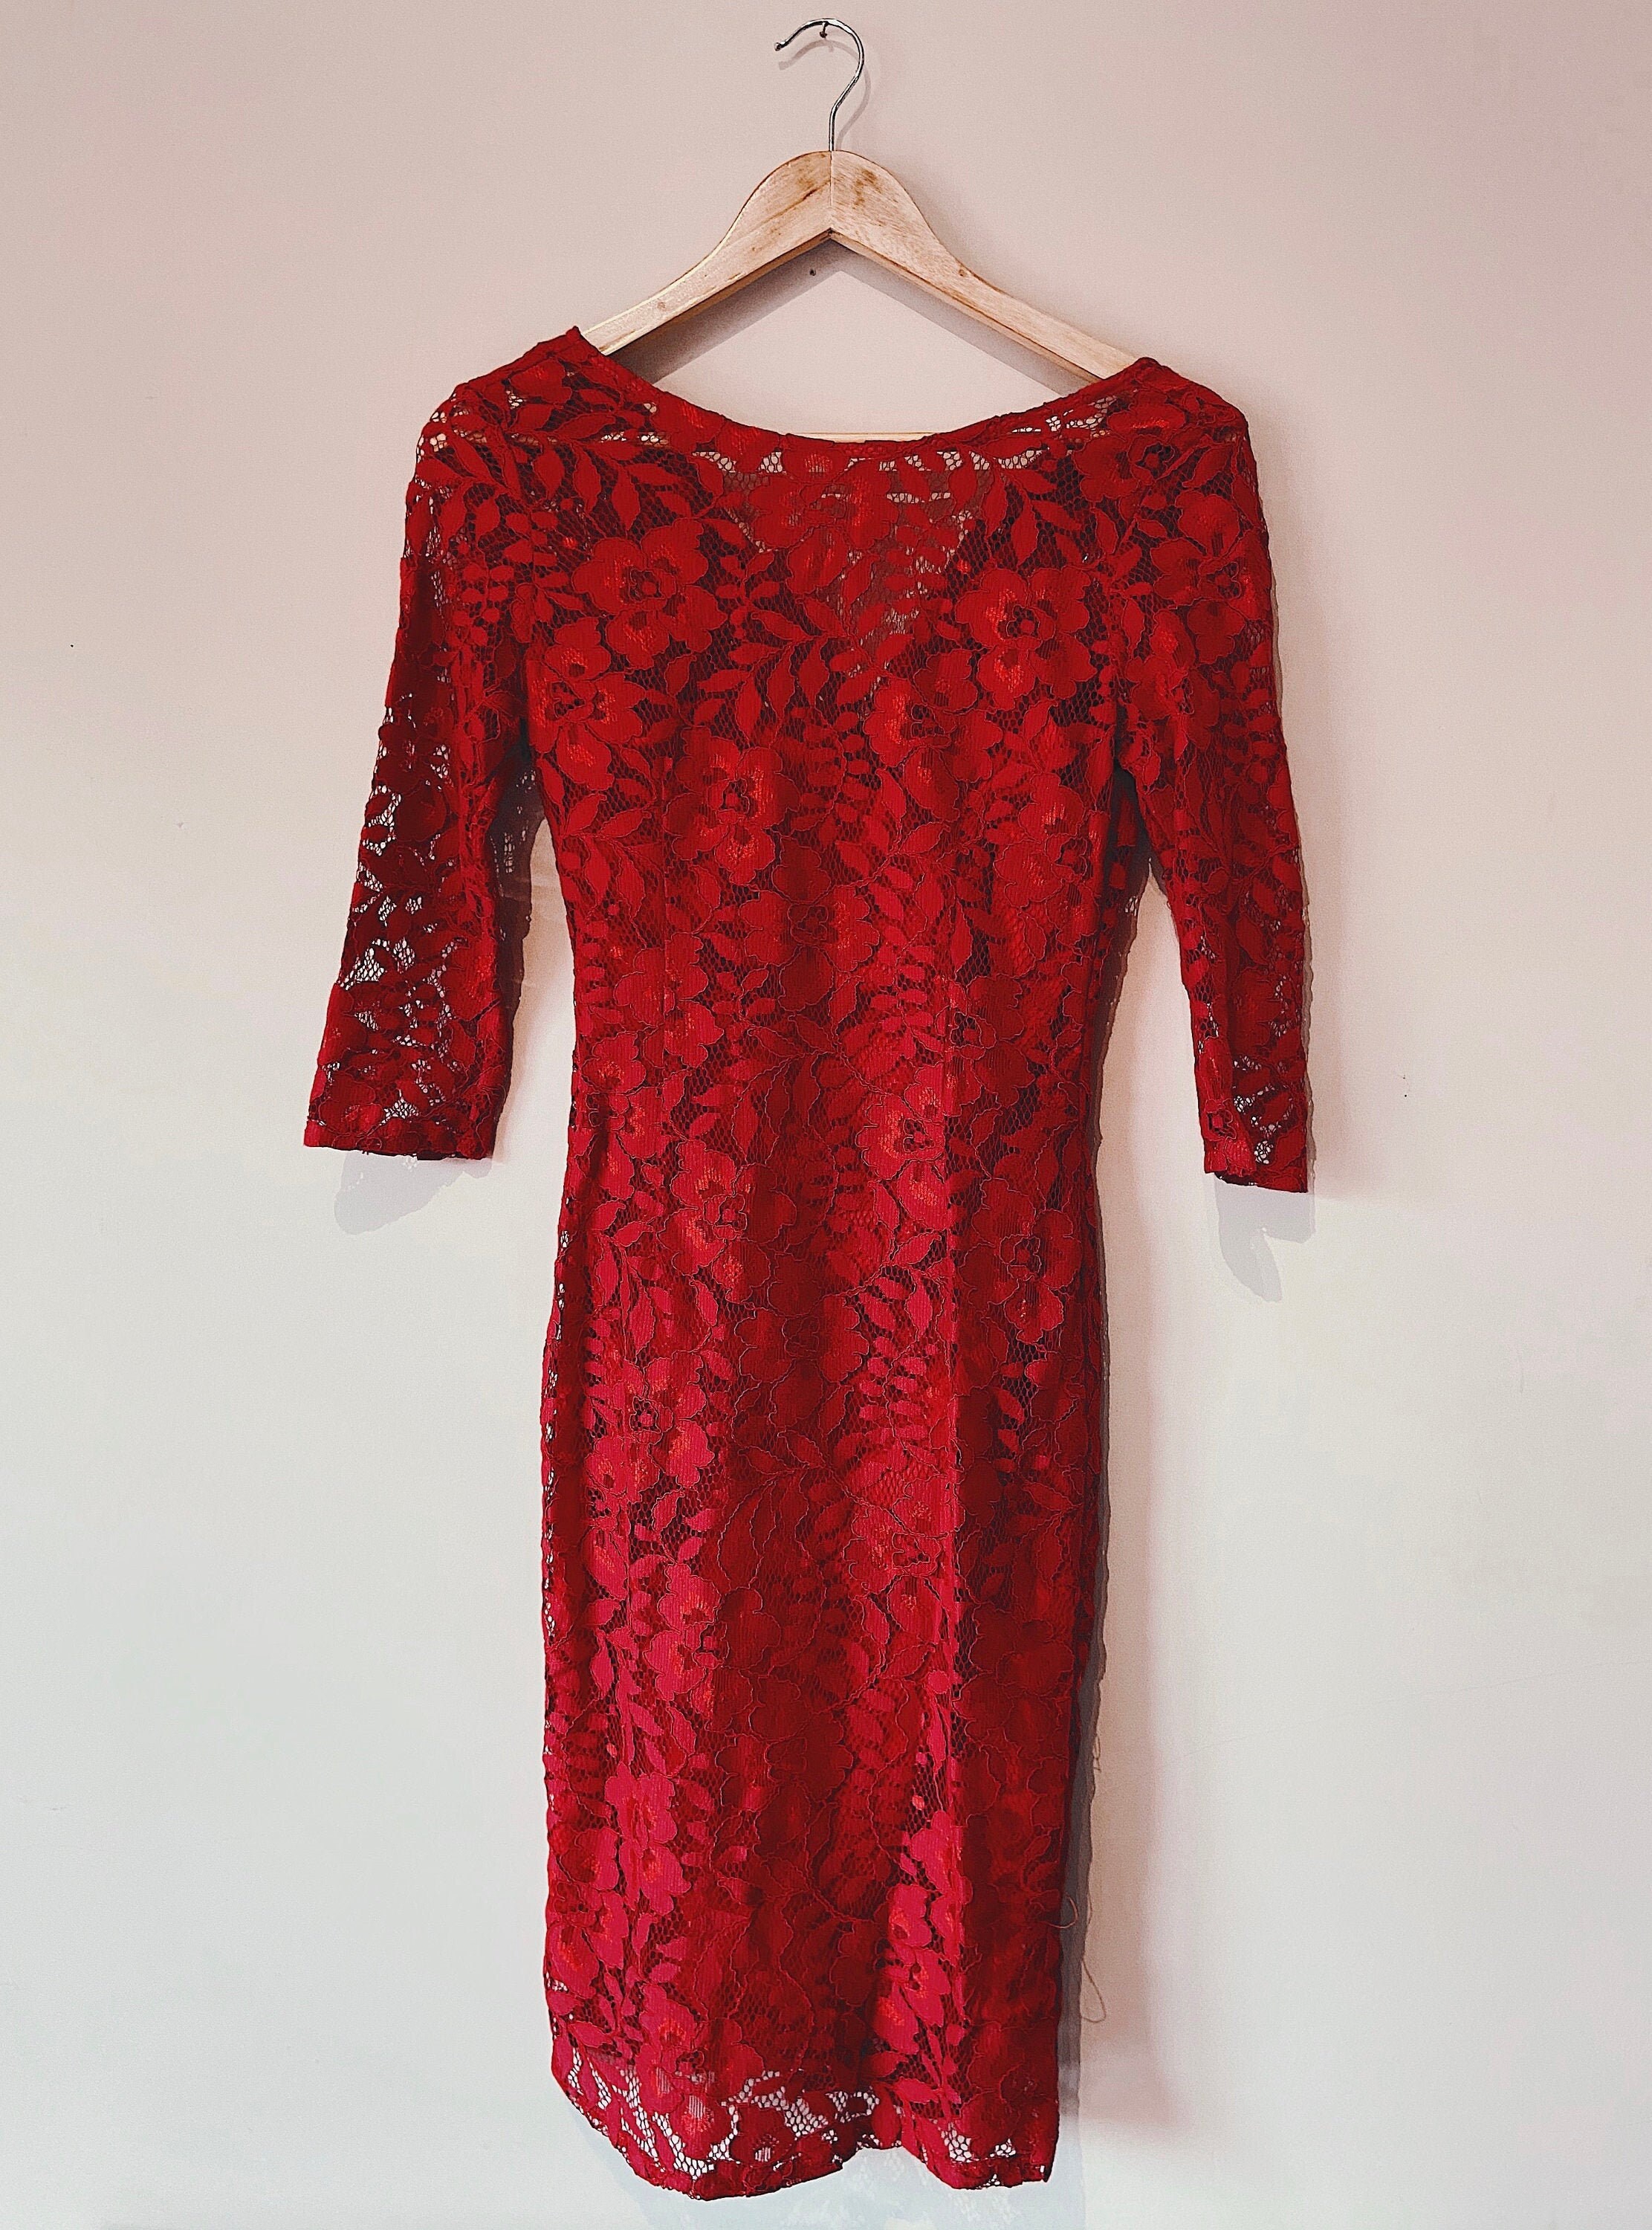 Vintage style red lace dress Women's festive evening | Etsy